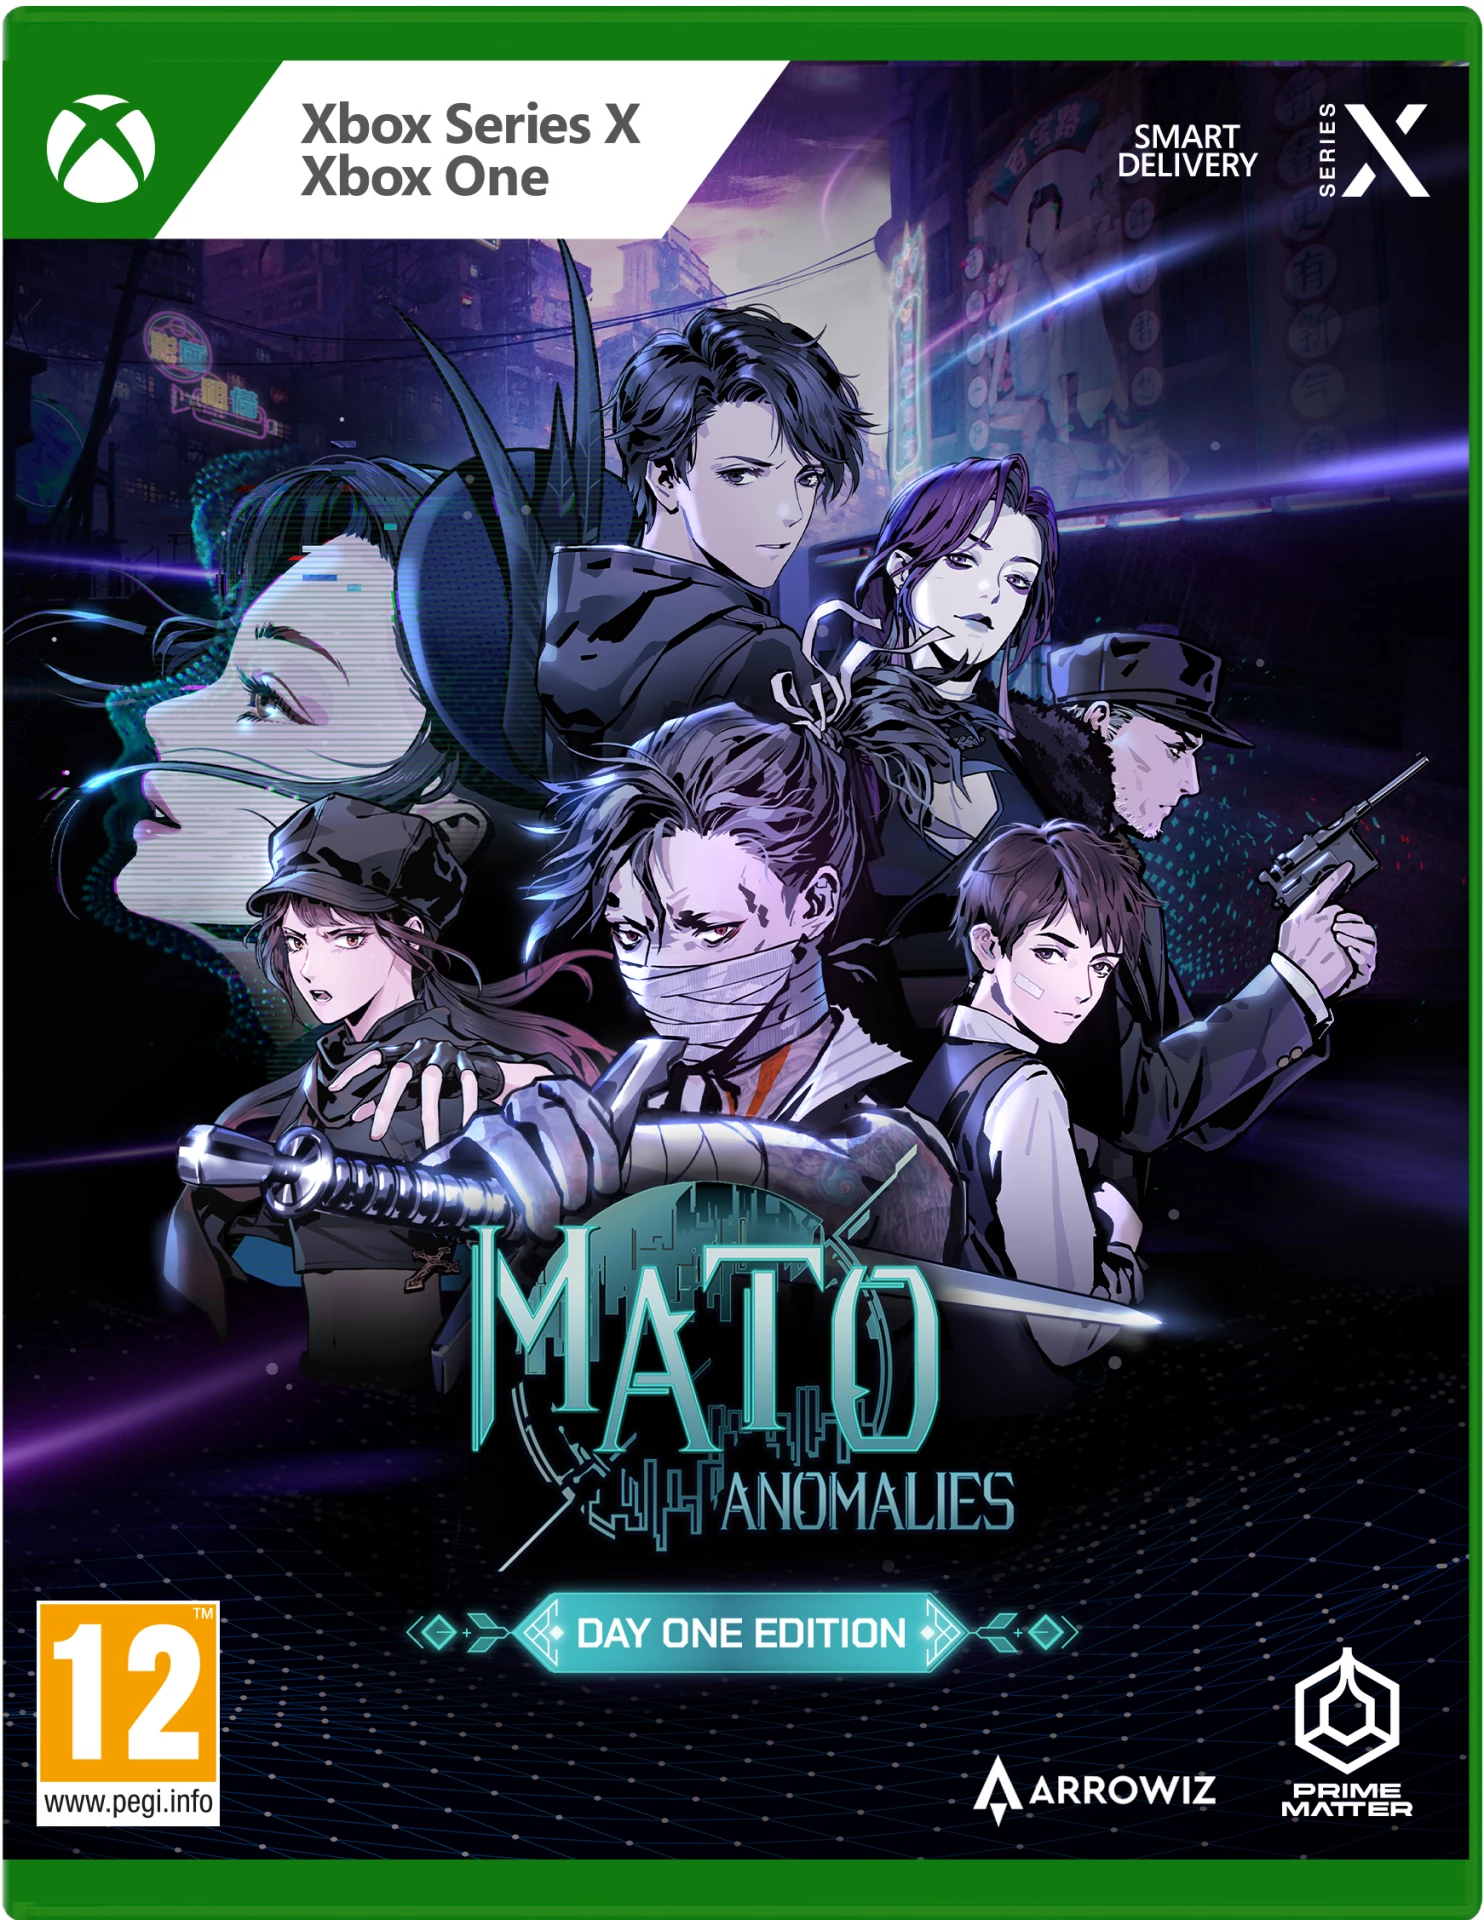 Mato: Anomalies - Day One Edition (Xbox Series X), Arrowiz, Prime Matter